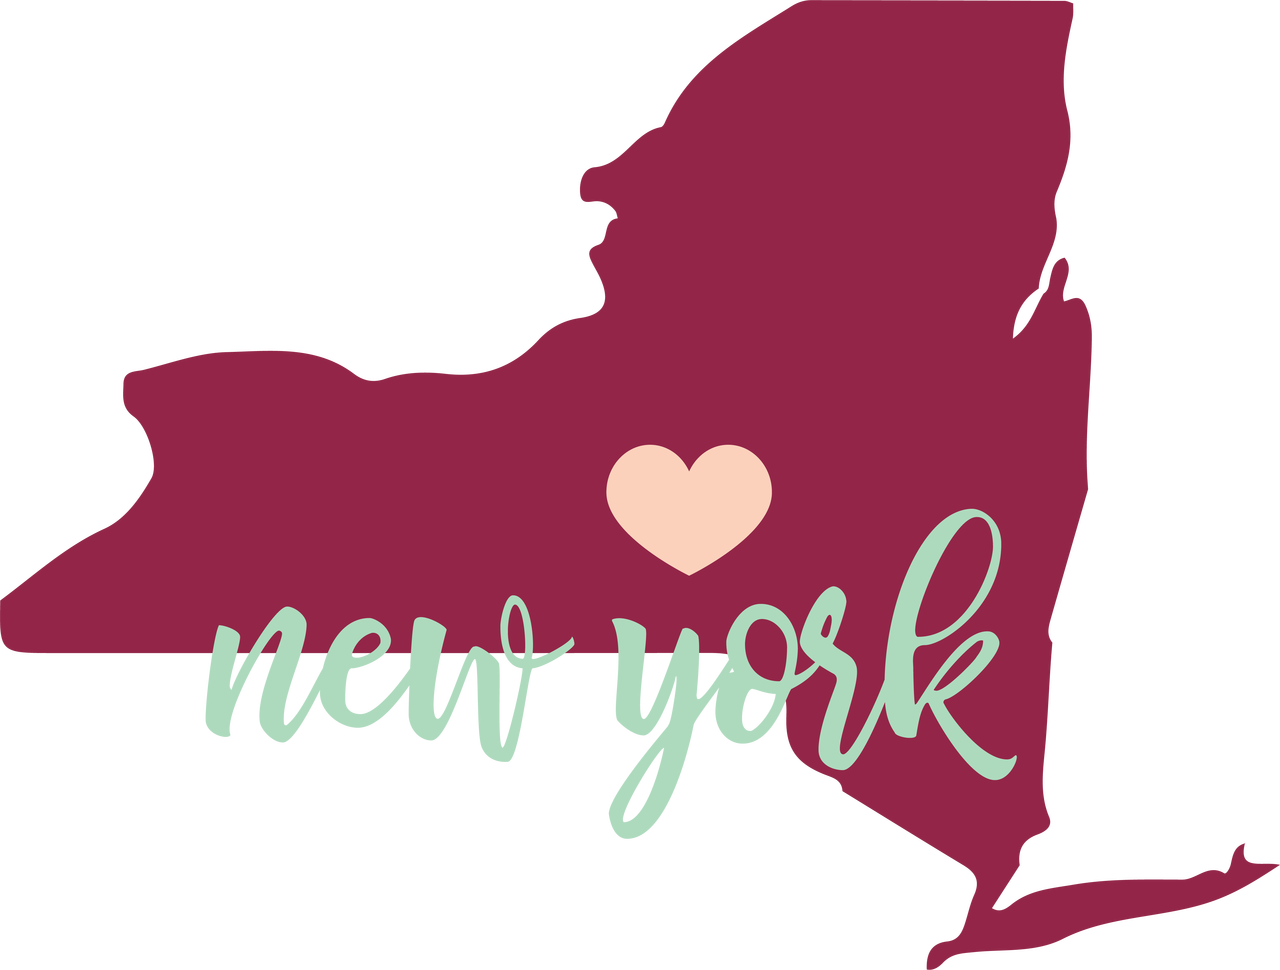 Categories - New York State Sticker (1280x970)